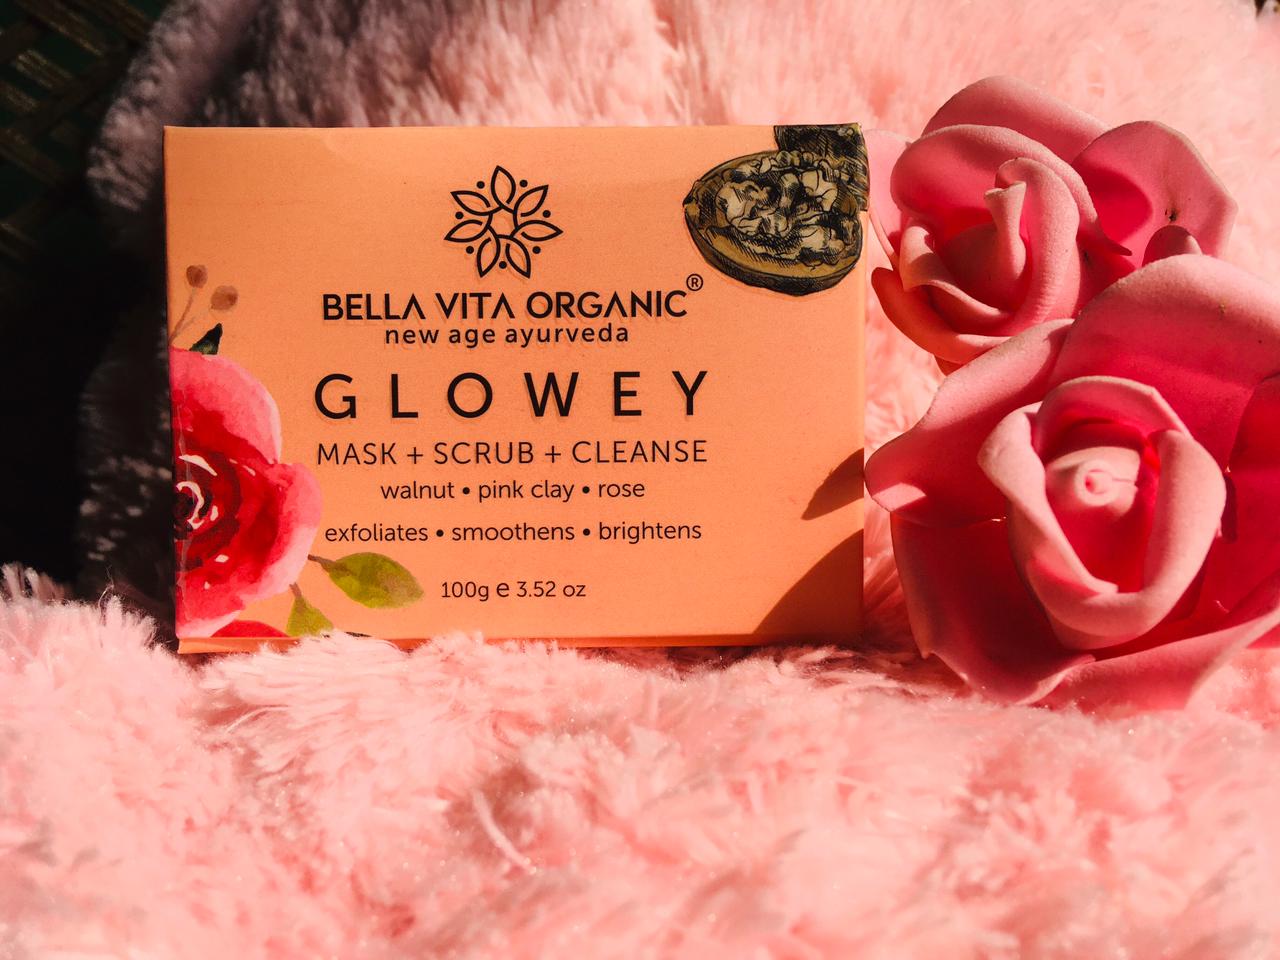 Bella Vita Glowey Mask+Scrub+Cleanse Review